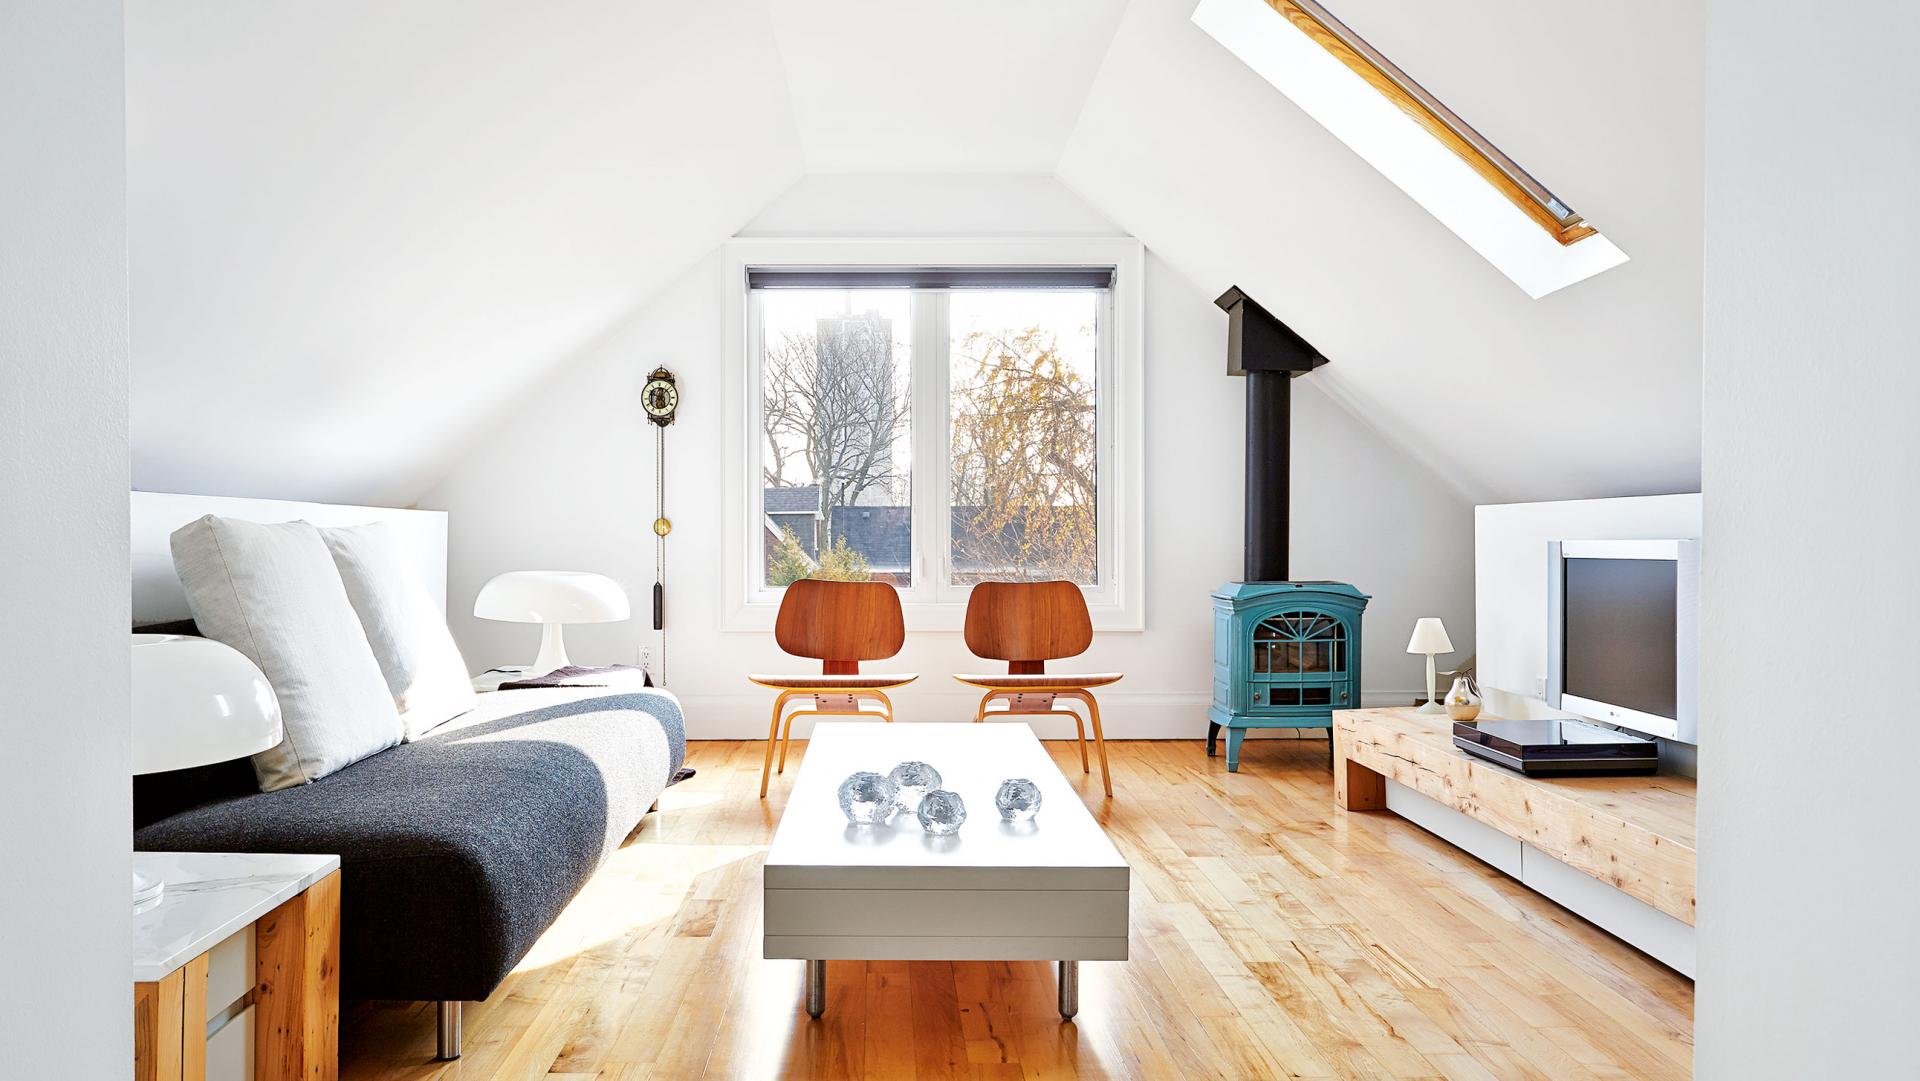 30 Attic Living Room Ideas Adorable Home